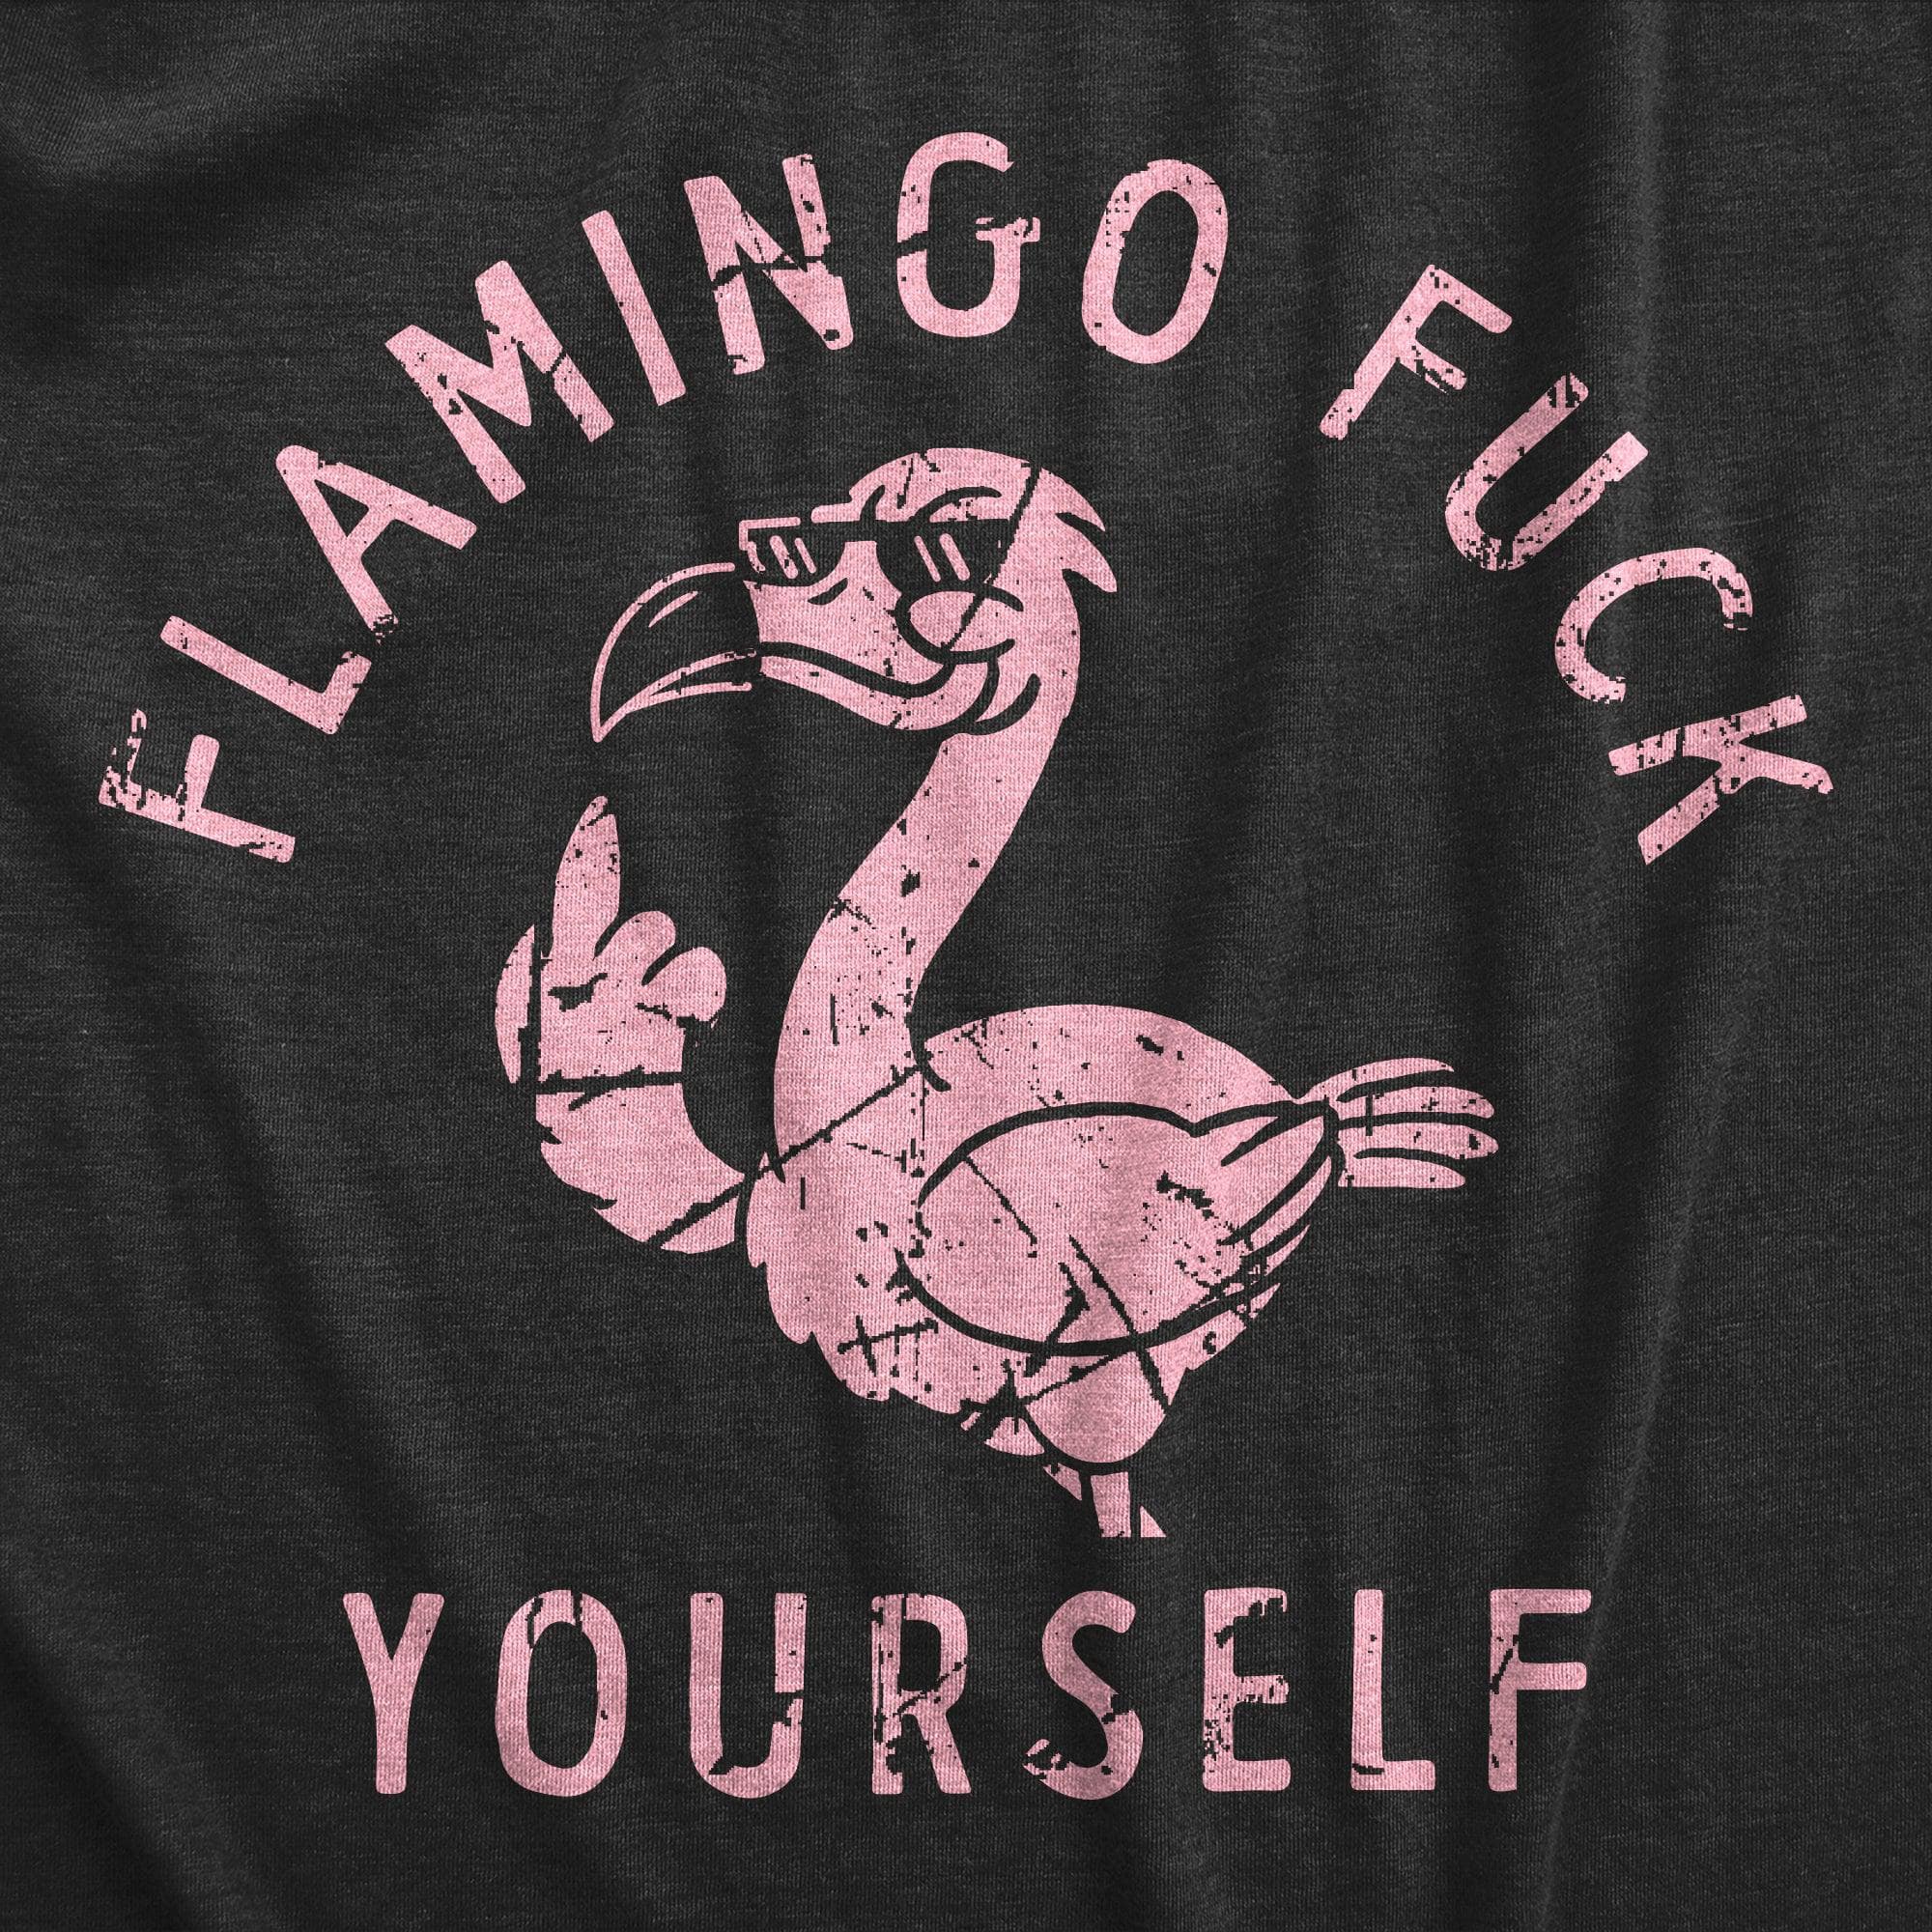 FlamingoFuckYourself Men's Tshirt  -  Crazy Dog T-Shirts